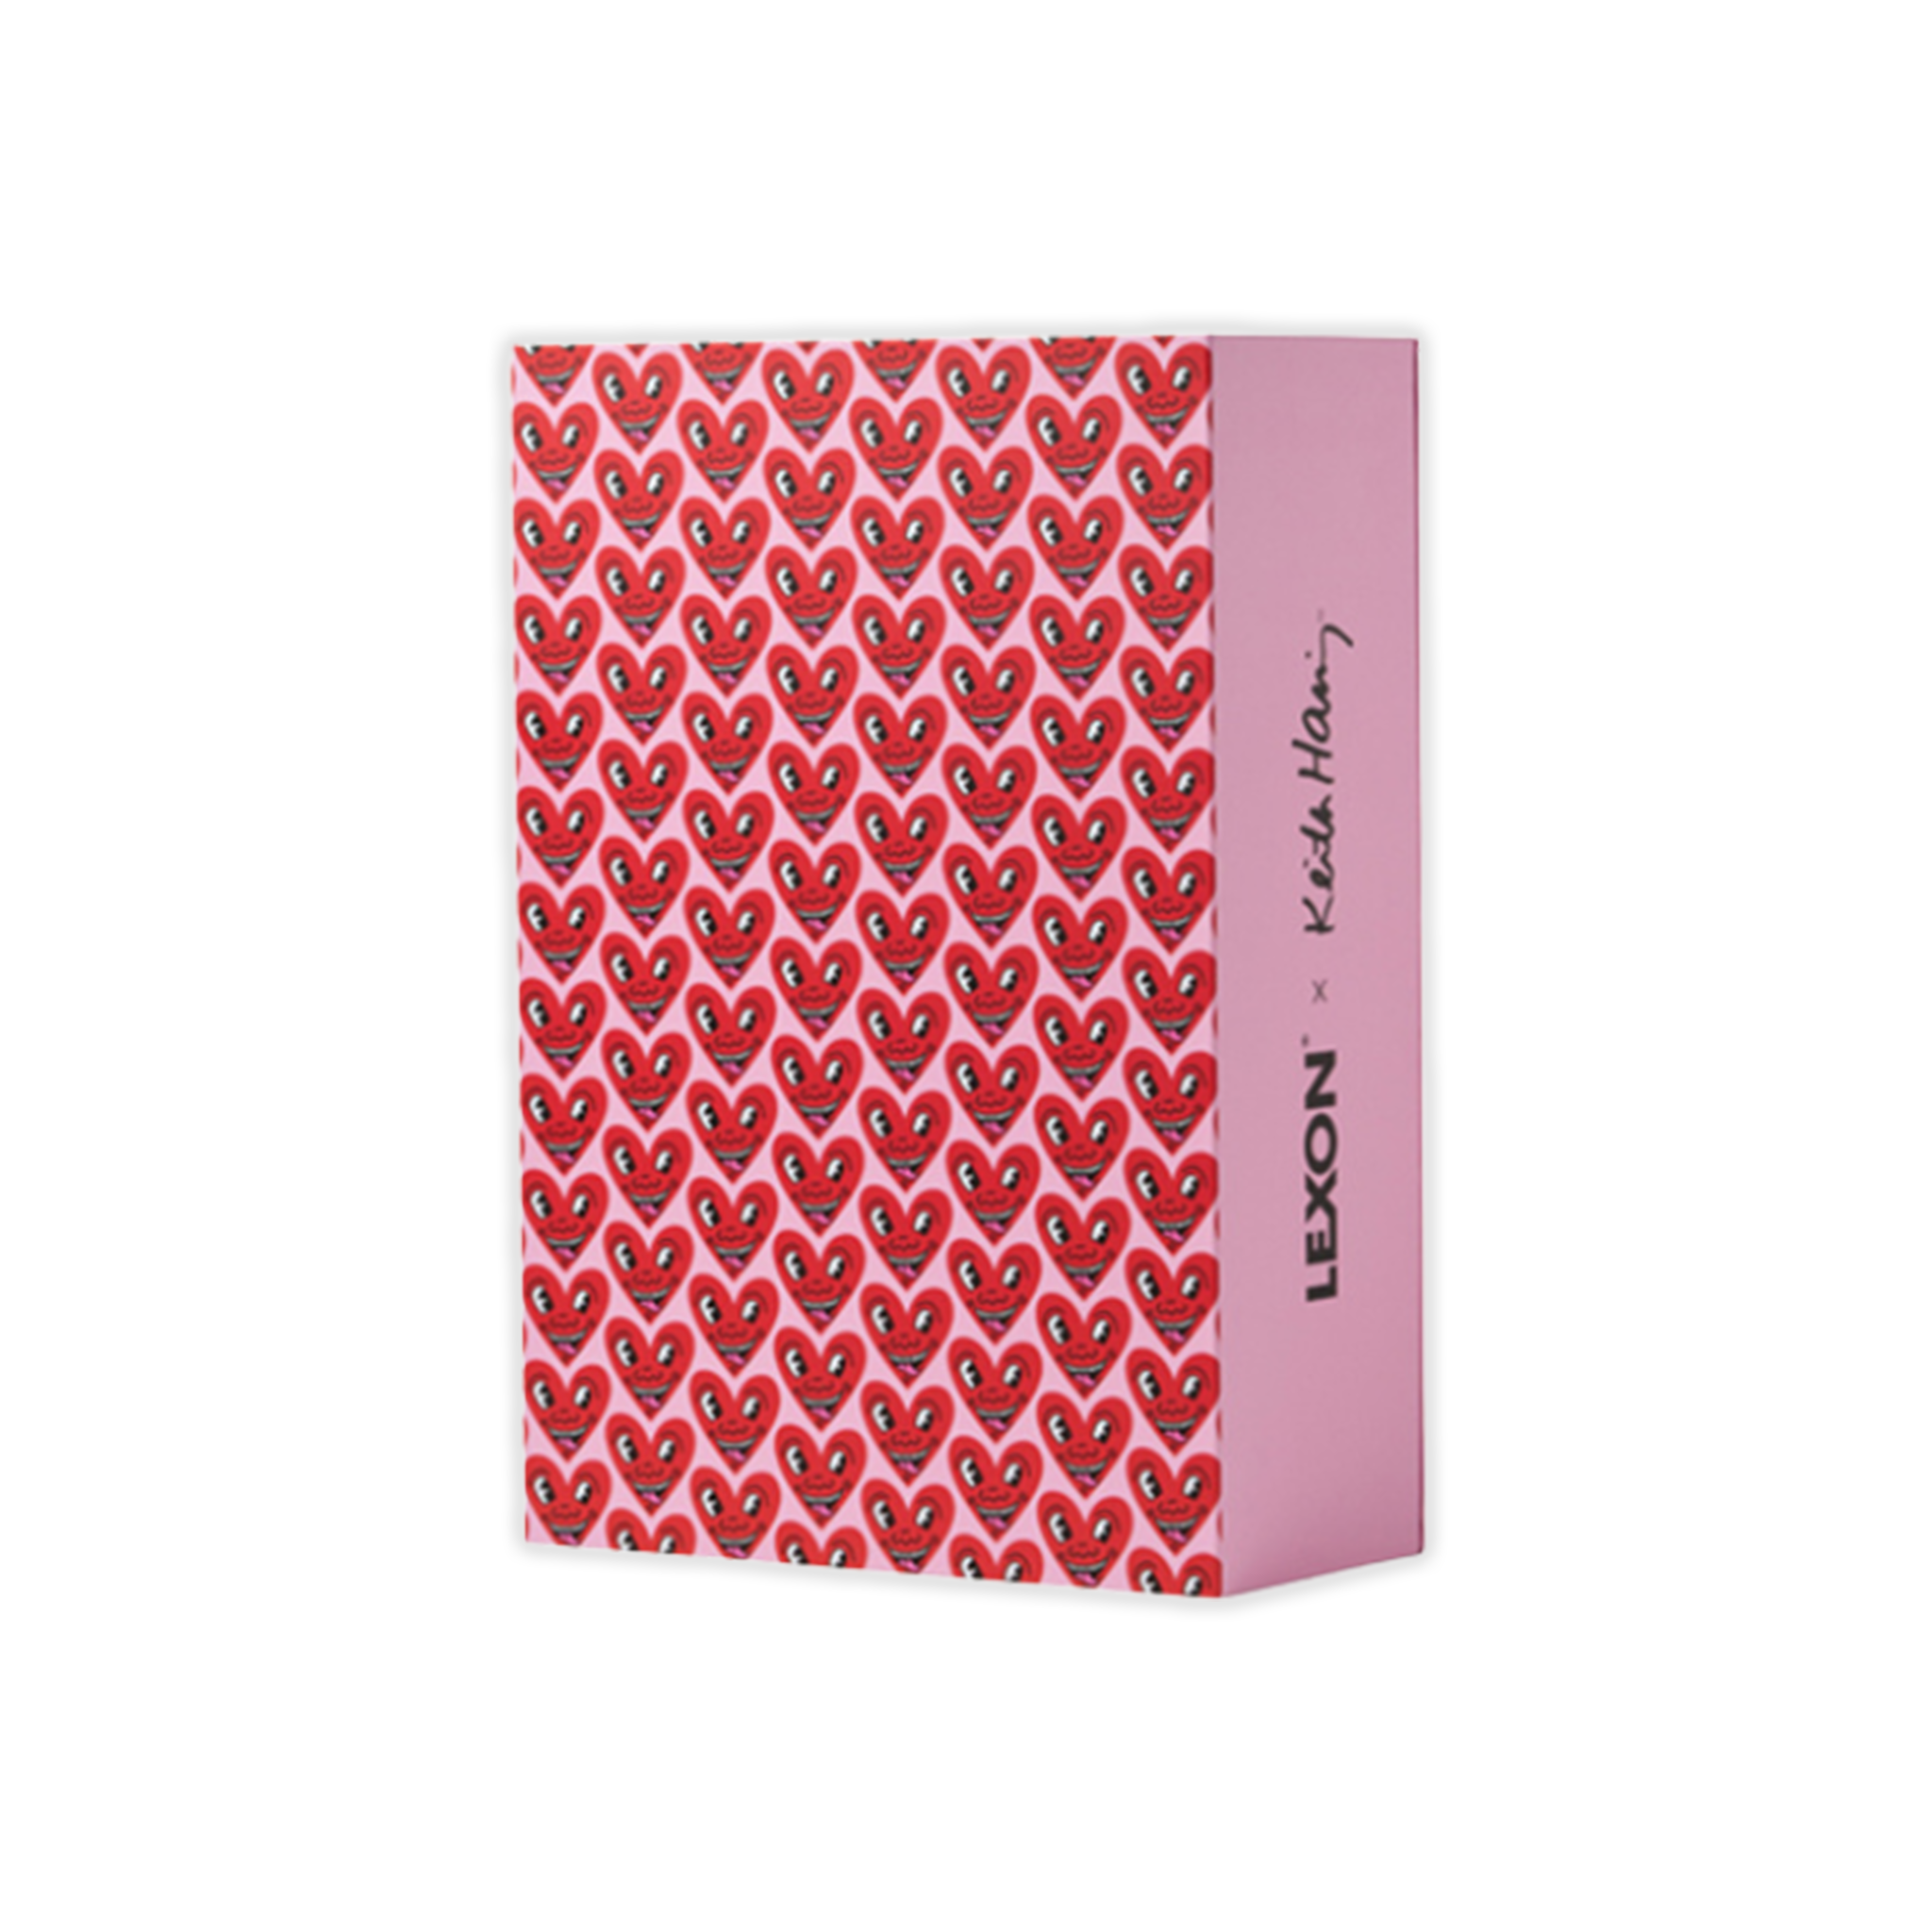 Lexon x Keith Haring Heart Gift Set